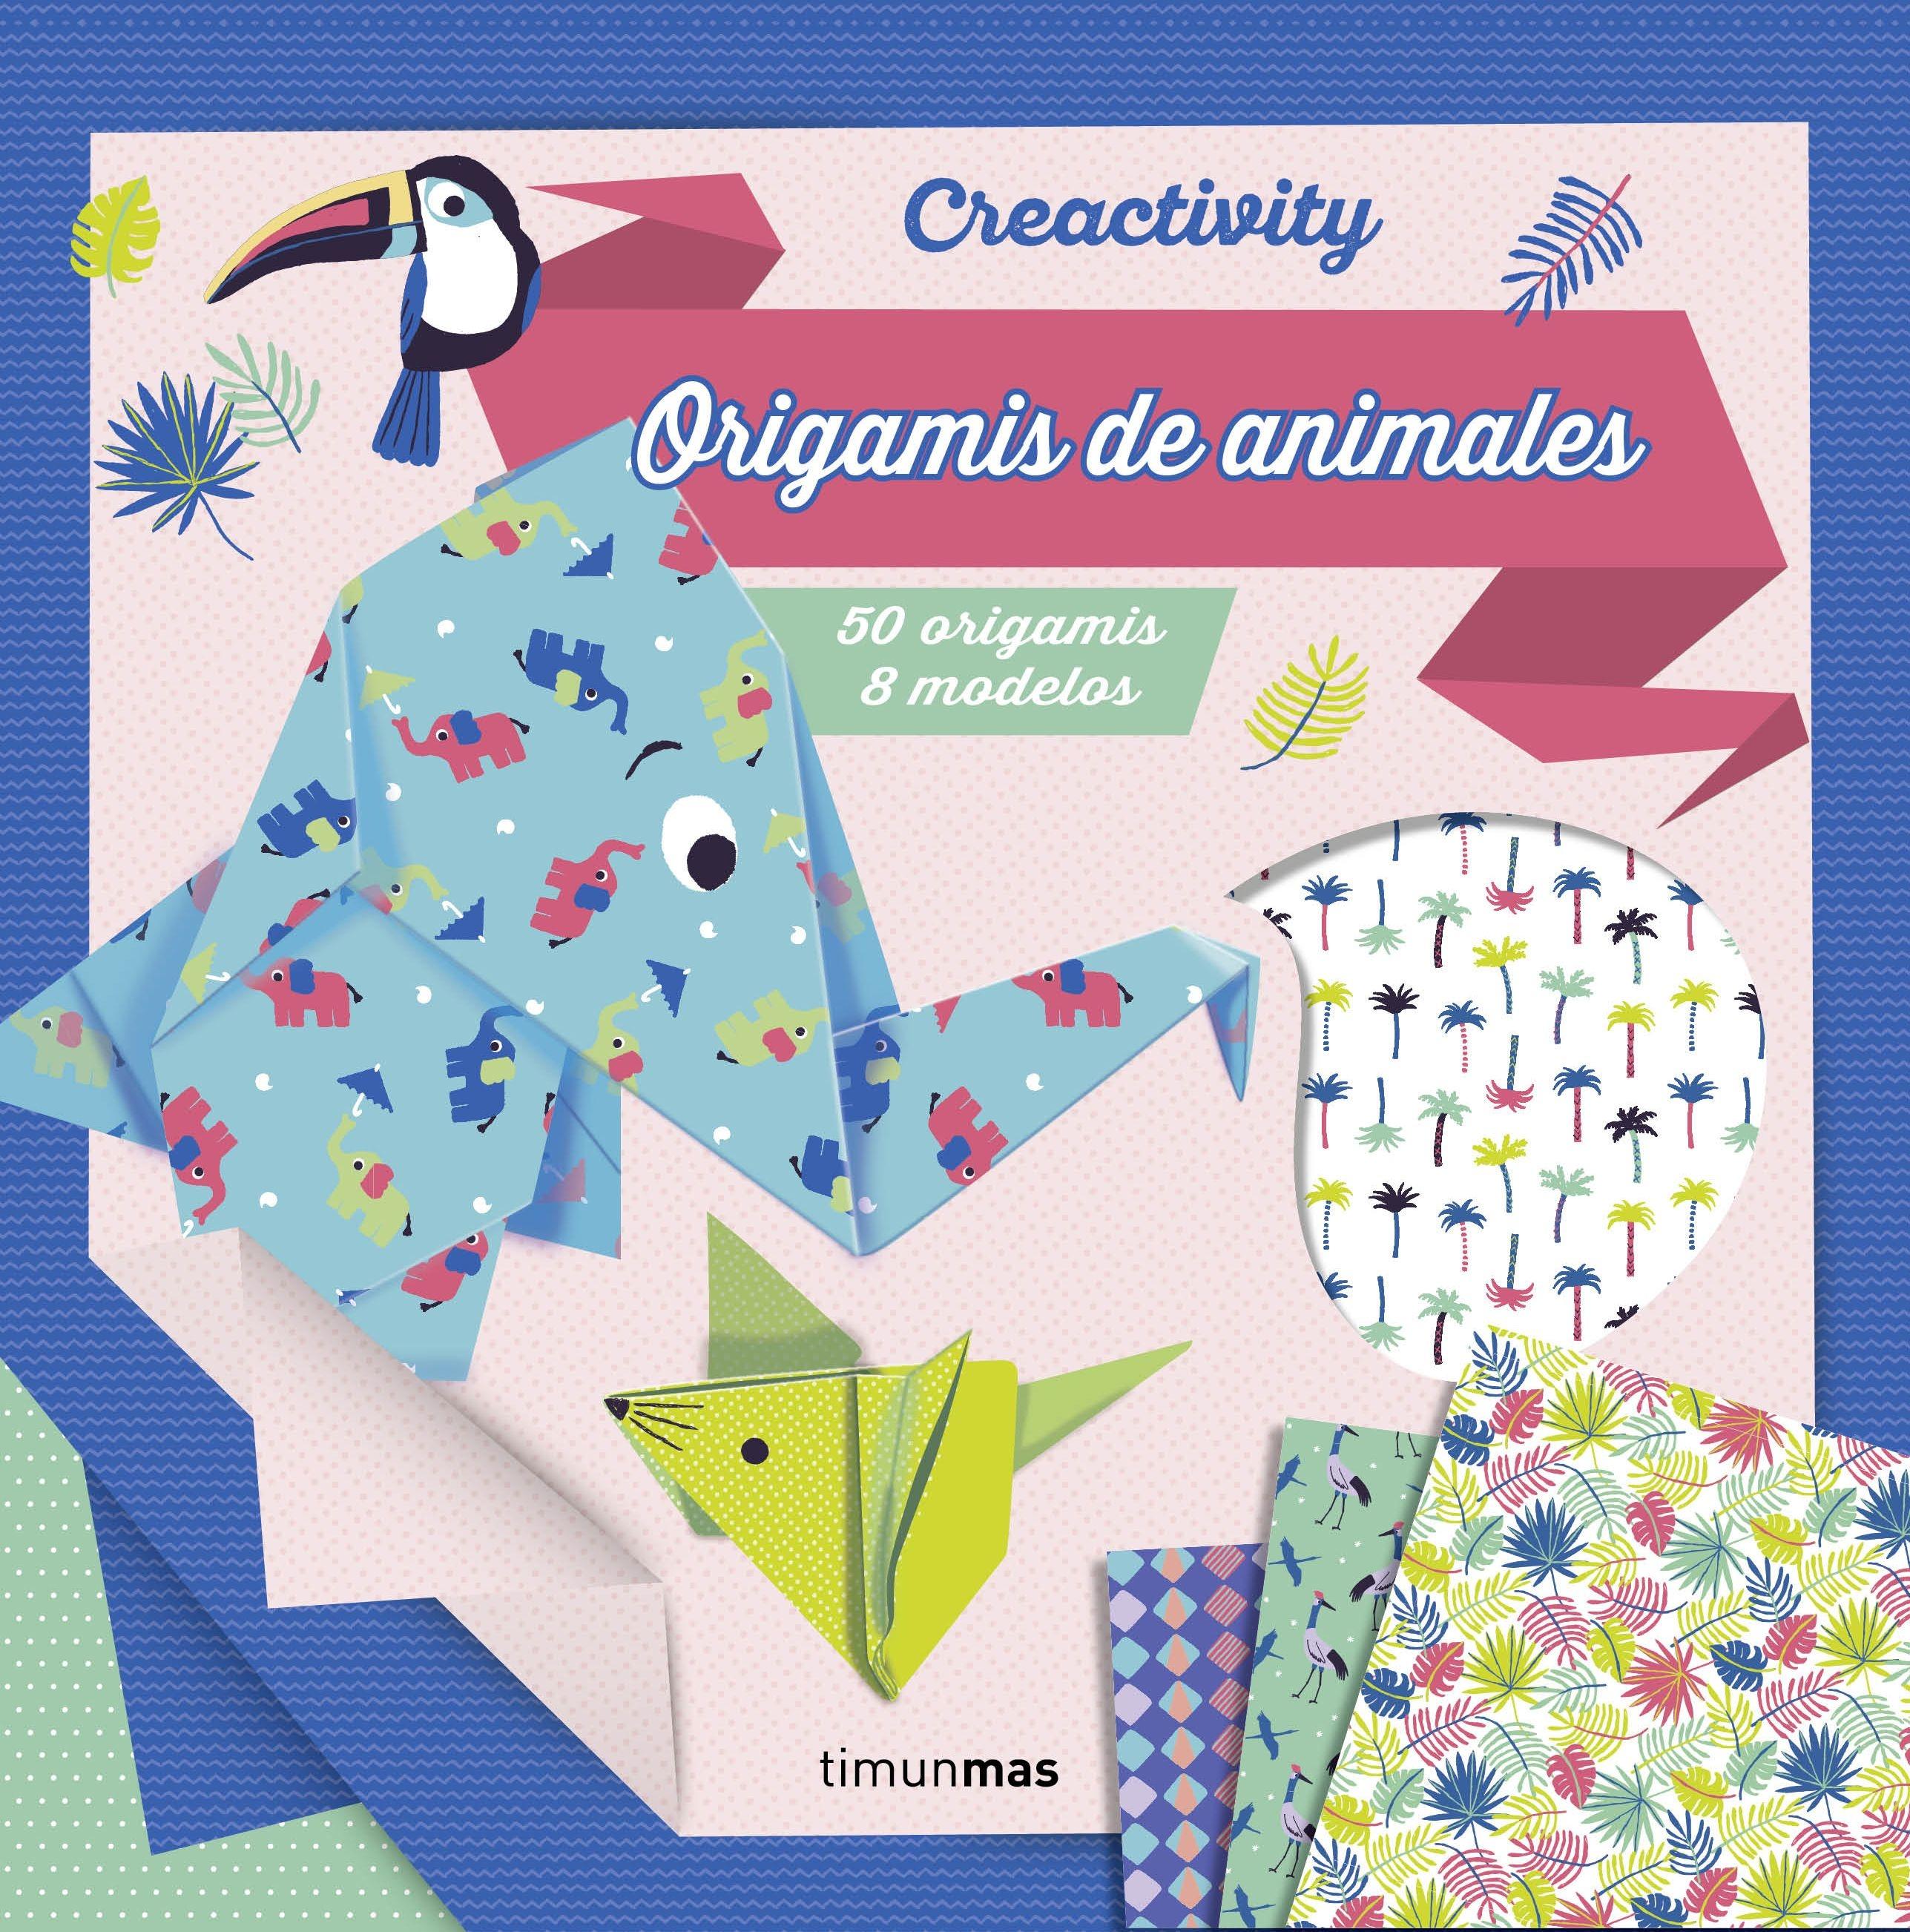 Creactivity. Origamis de animales